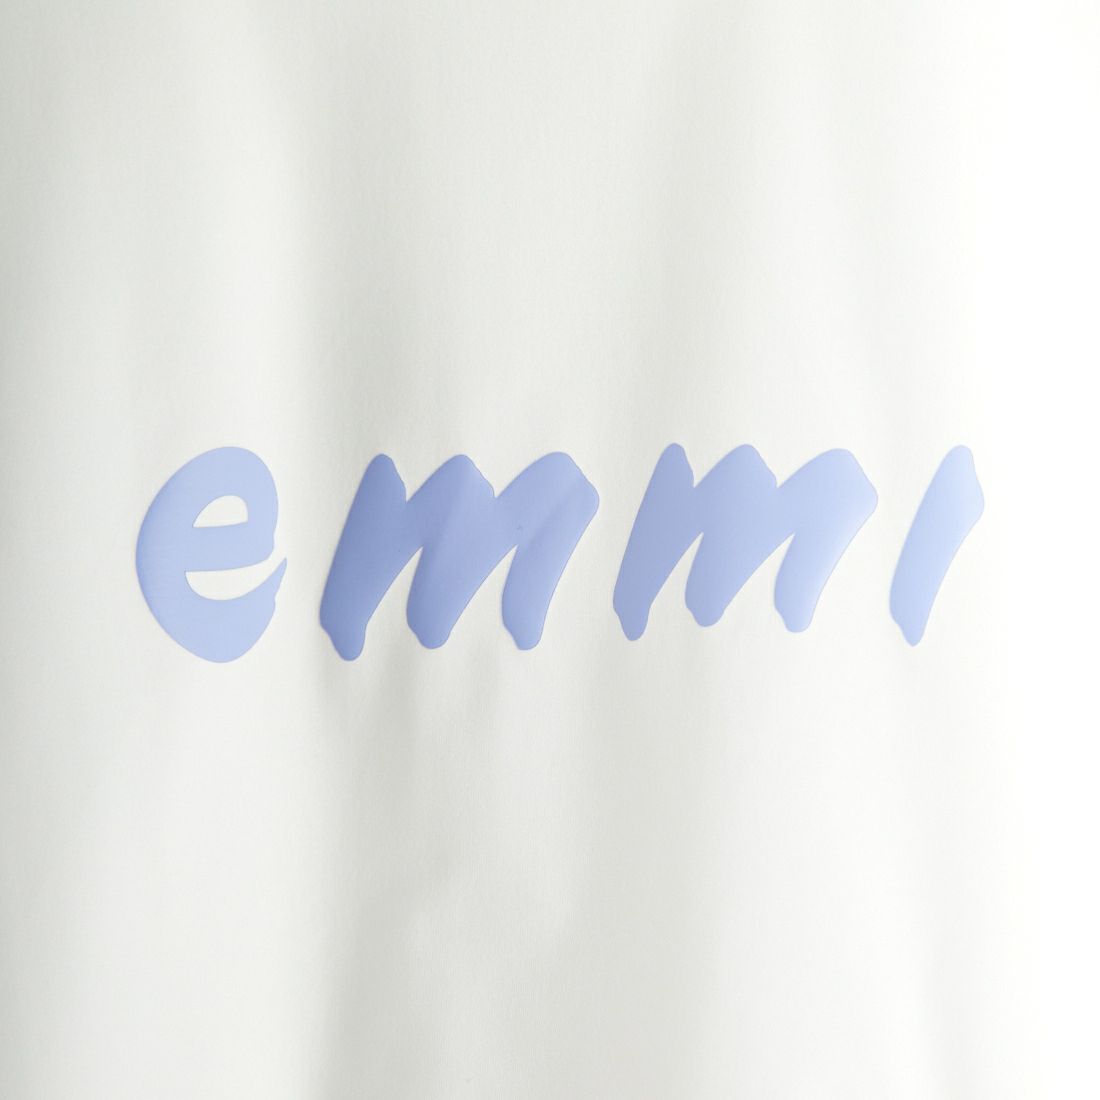 emmi [エミ] ペイントemmiロゴTシャツ [13WCT241094] WHT